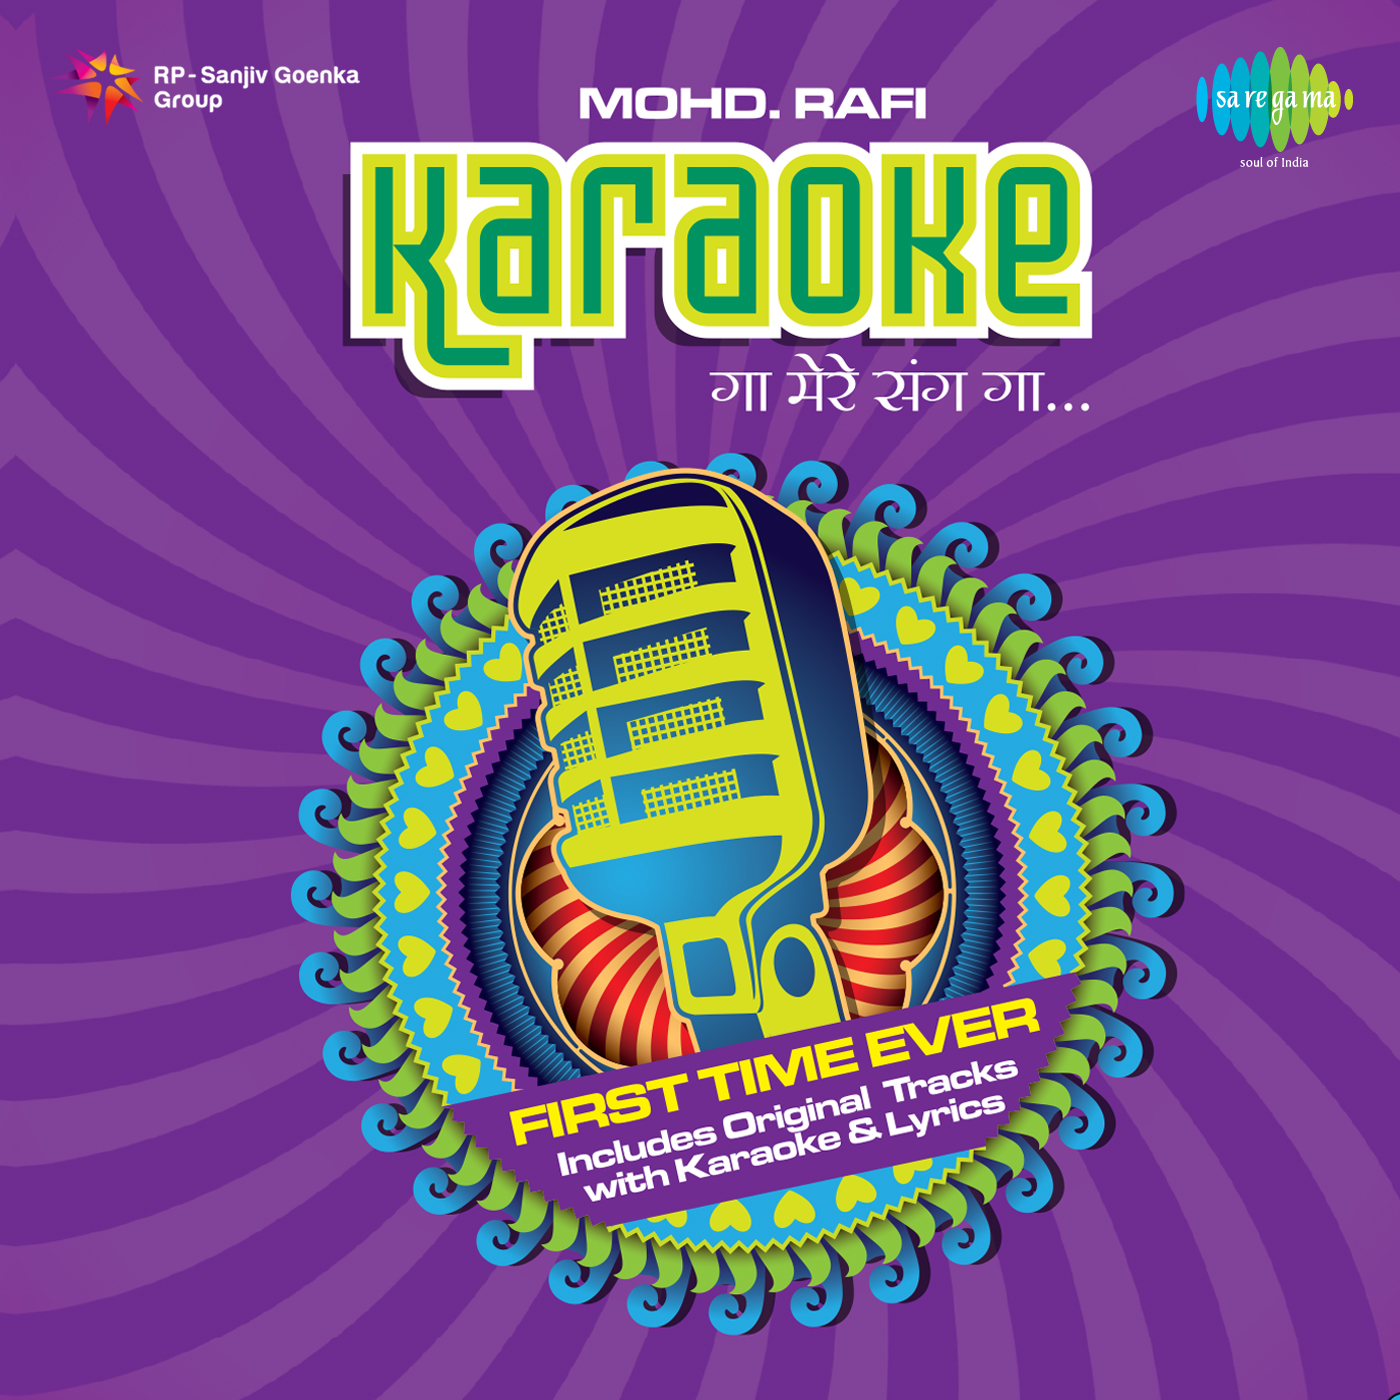 Gaa Mere Sang Gaa Karaoke Hits Of Mohd Rafi Cd 2